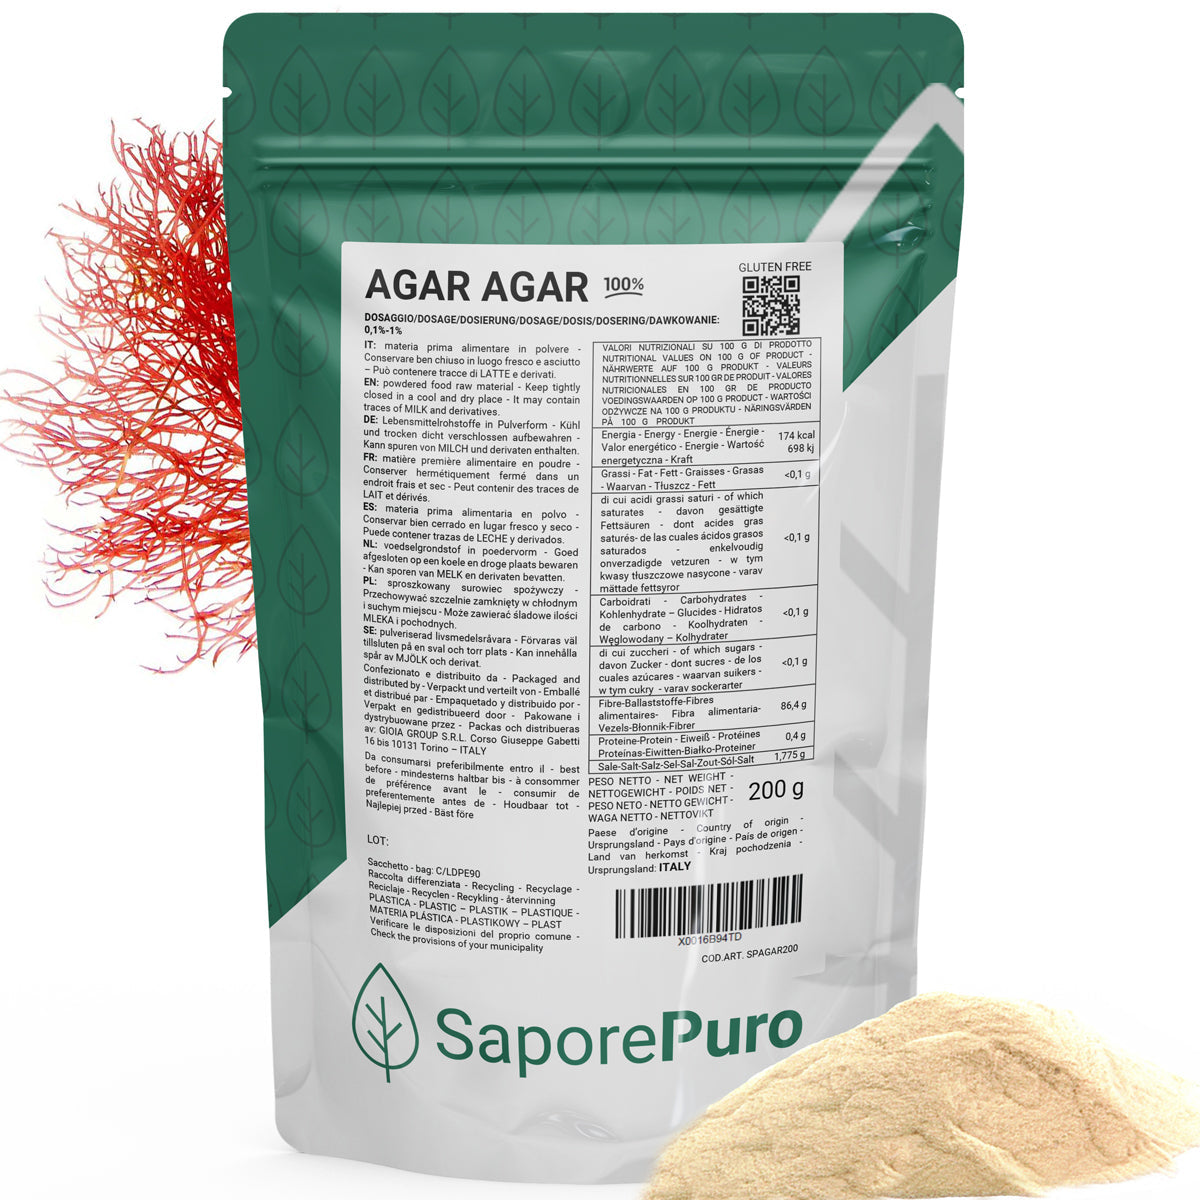 Agar Agar Glaze - E406 - Origine ITALIA - Per Glasse, Topping, Salse lisce - alternativa alla gelatina - SaporePuro